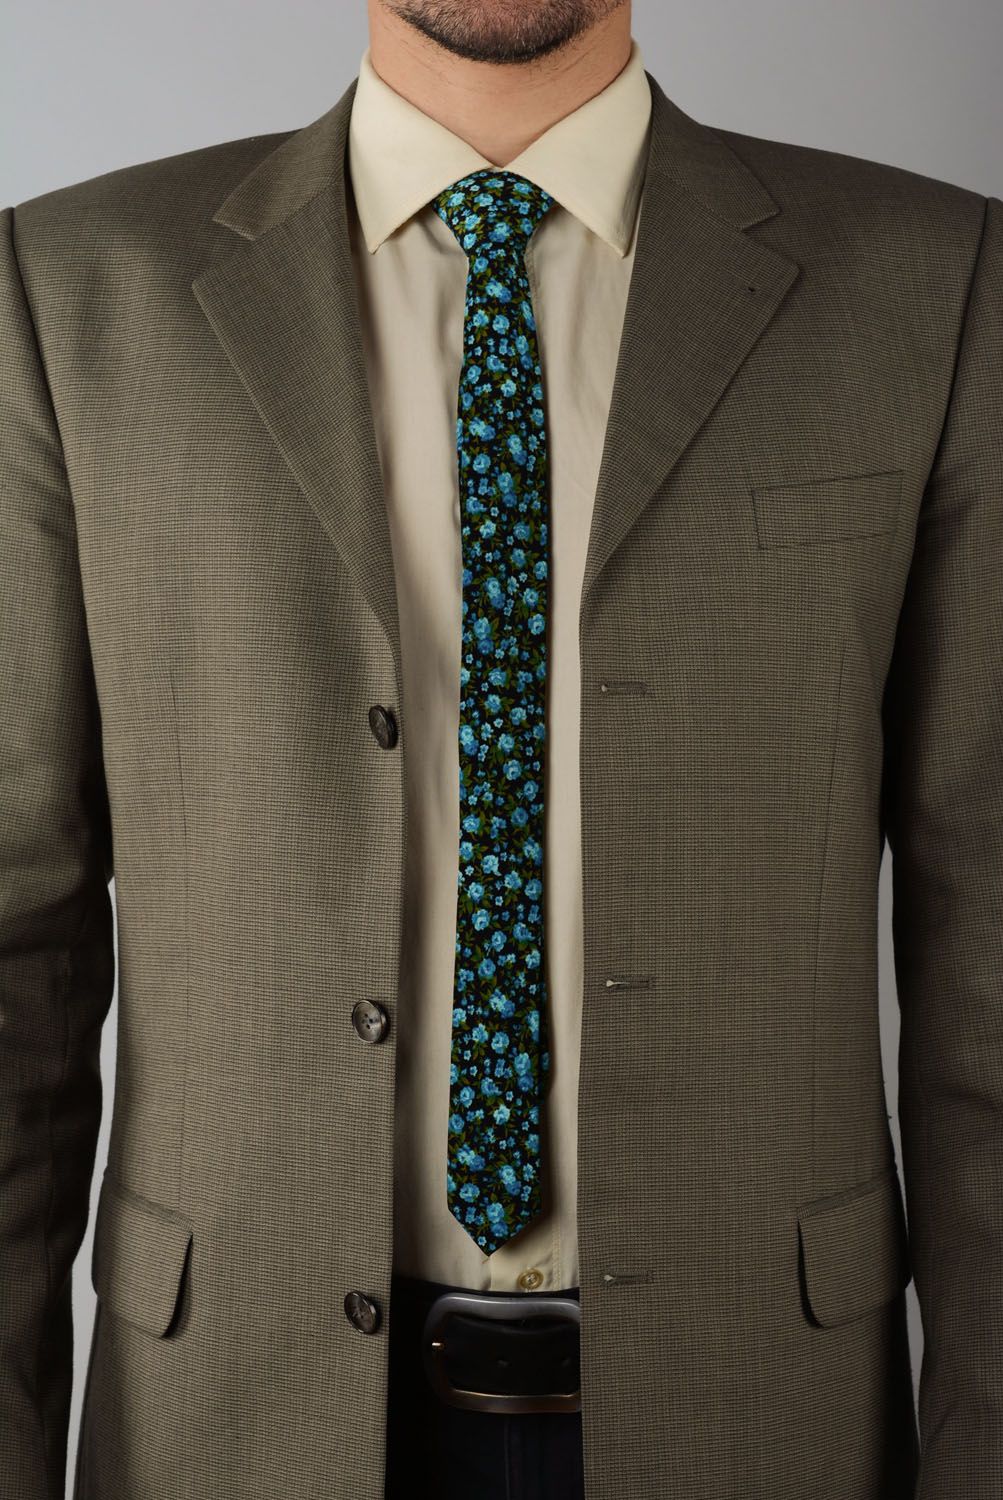 Krawatte mit Blumenprint foto 1